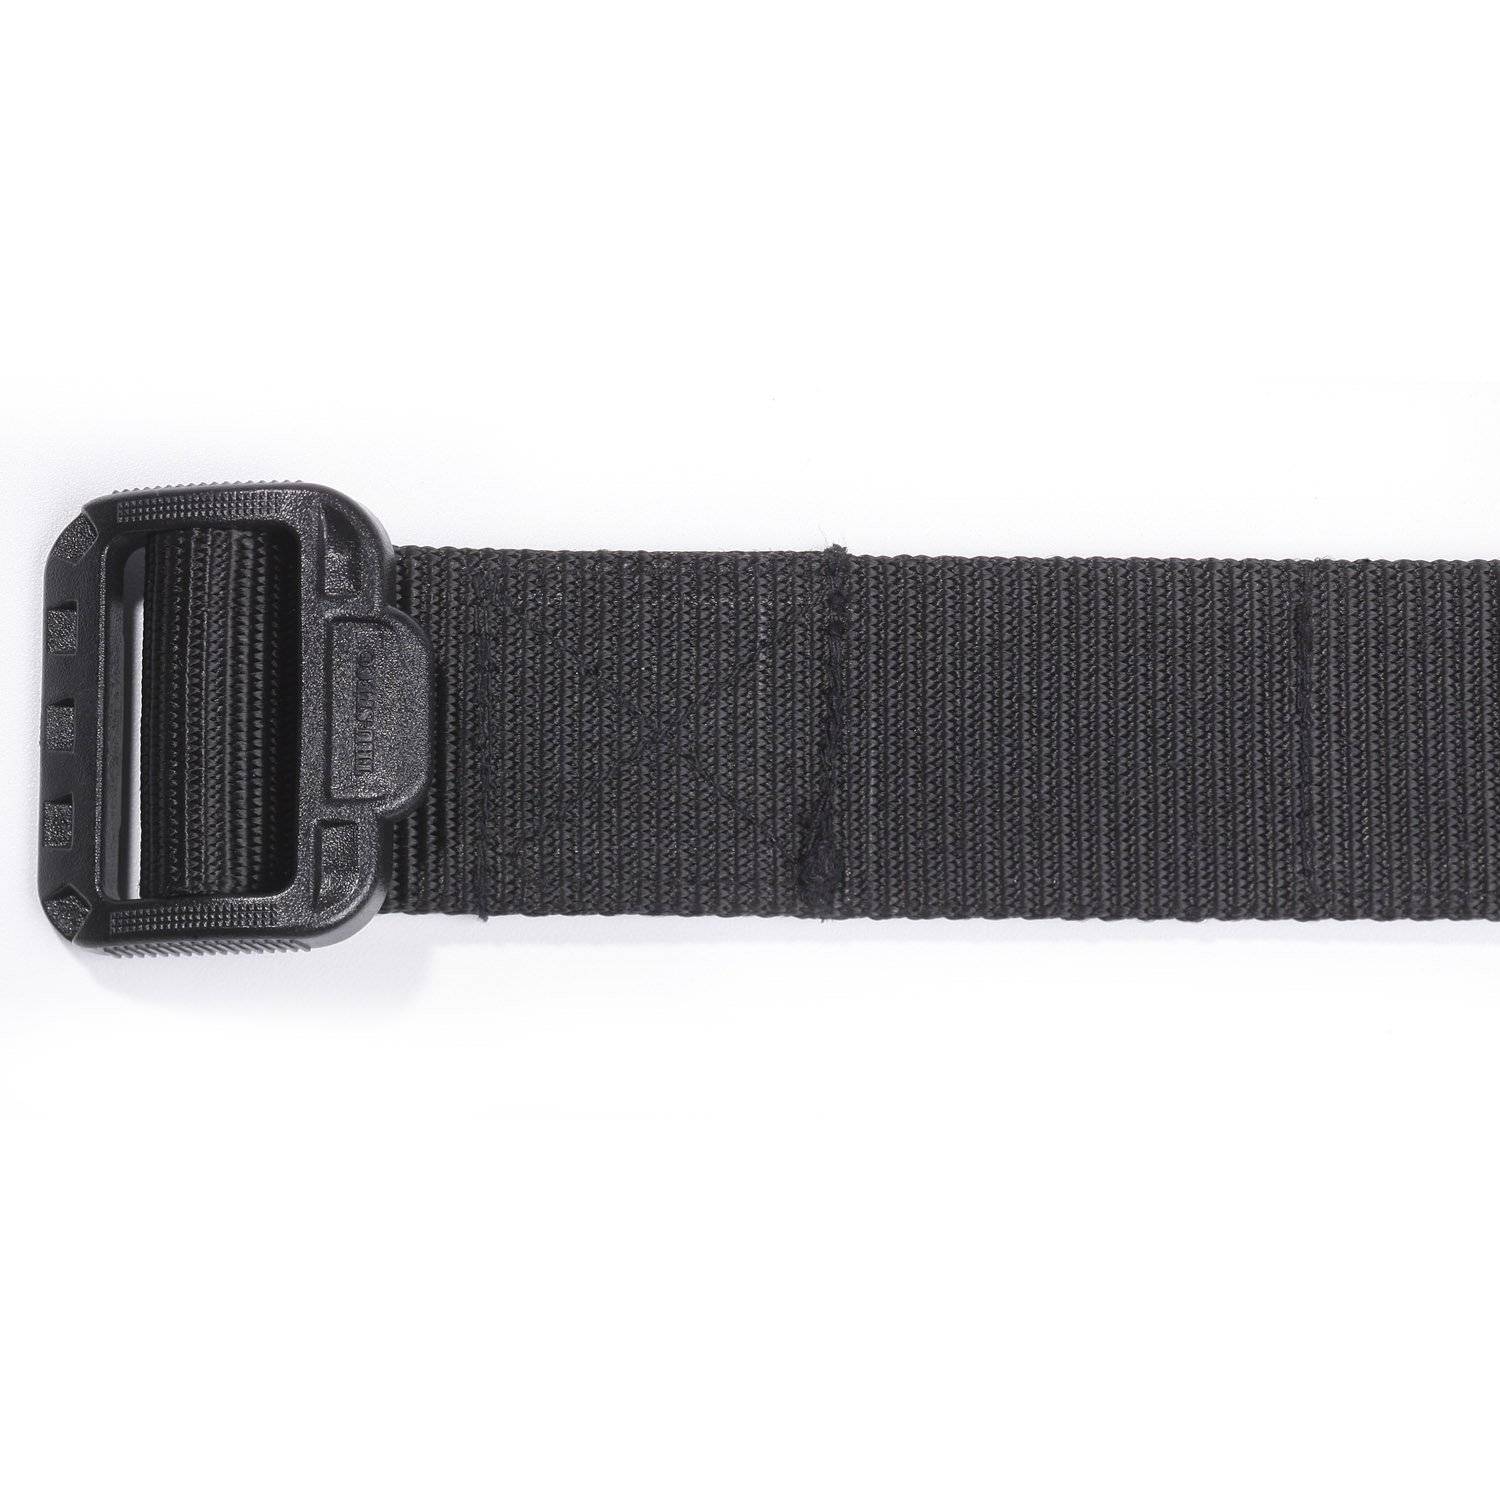 TRU-SPEC Belt Tru Black Security Friendly 3xl 4164008 for sale online 